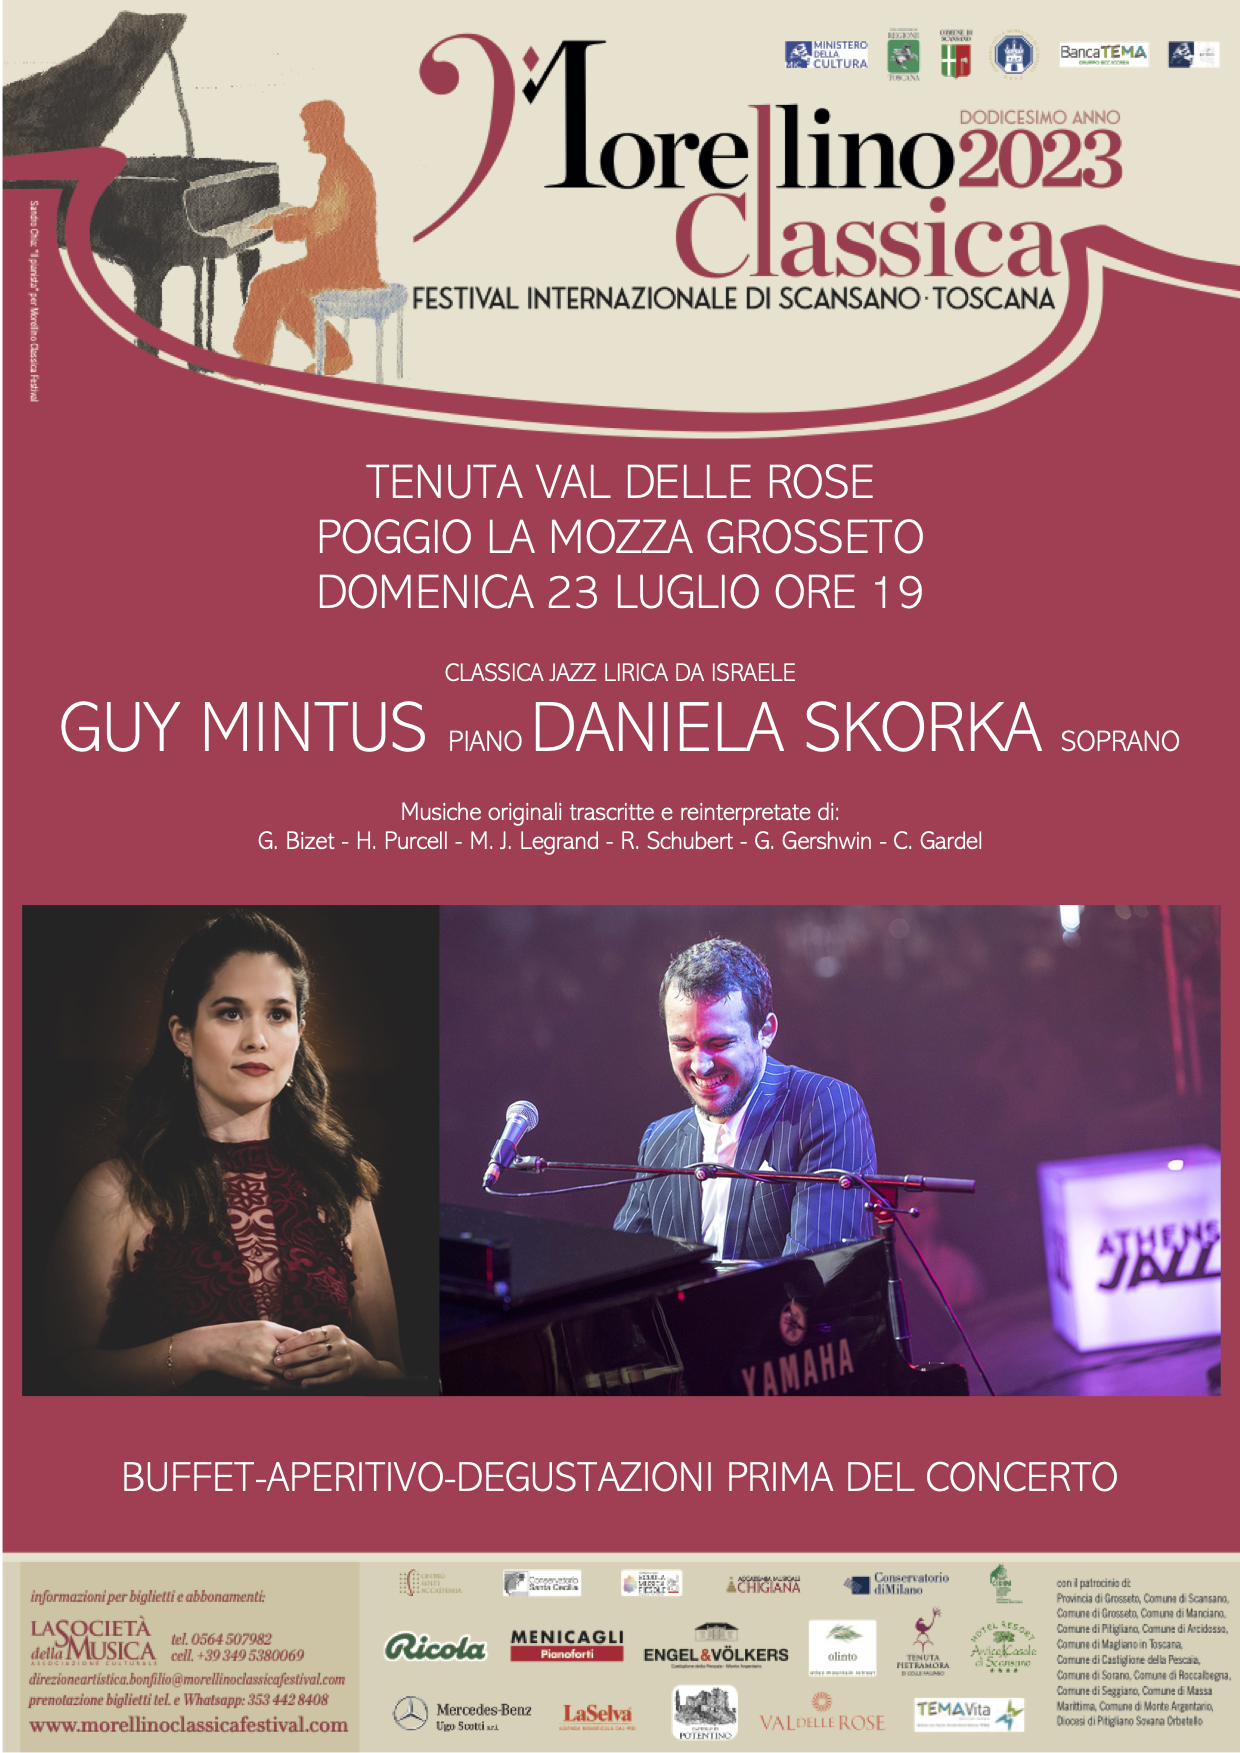 Guy Mintus pianoforte – Daniela Skorka soprano Tenuta val delle rose